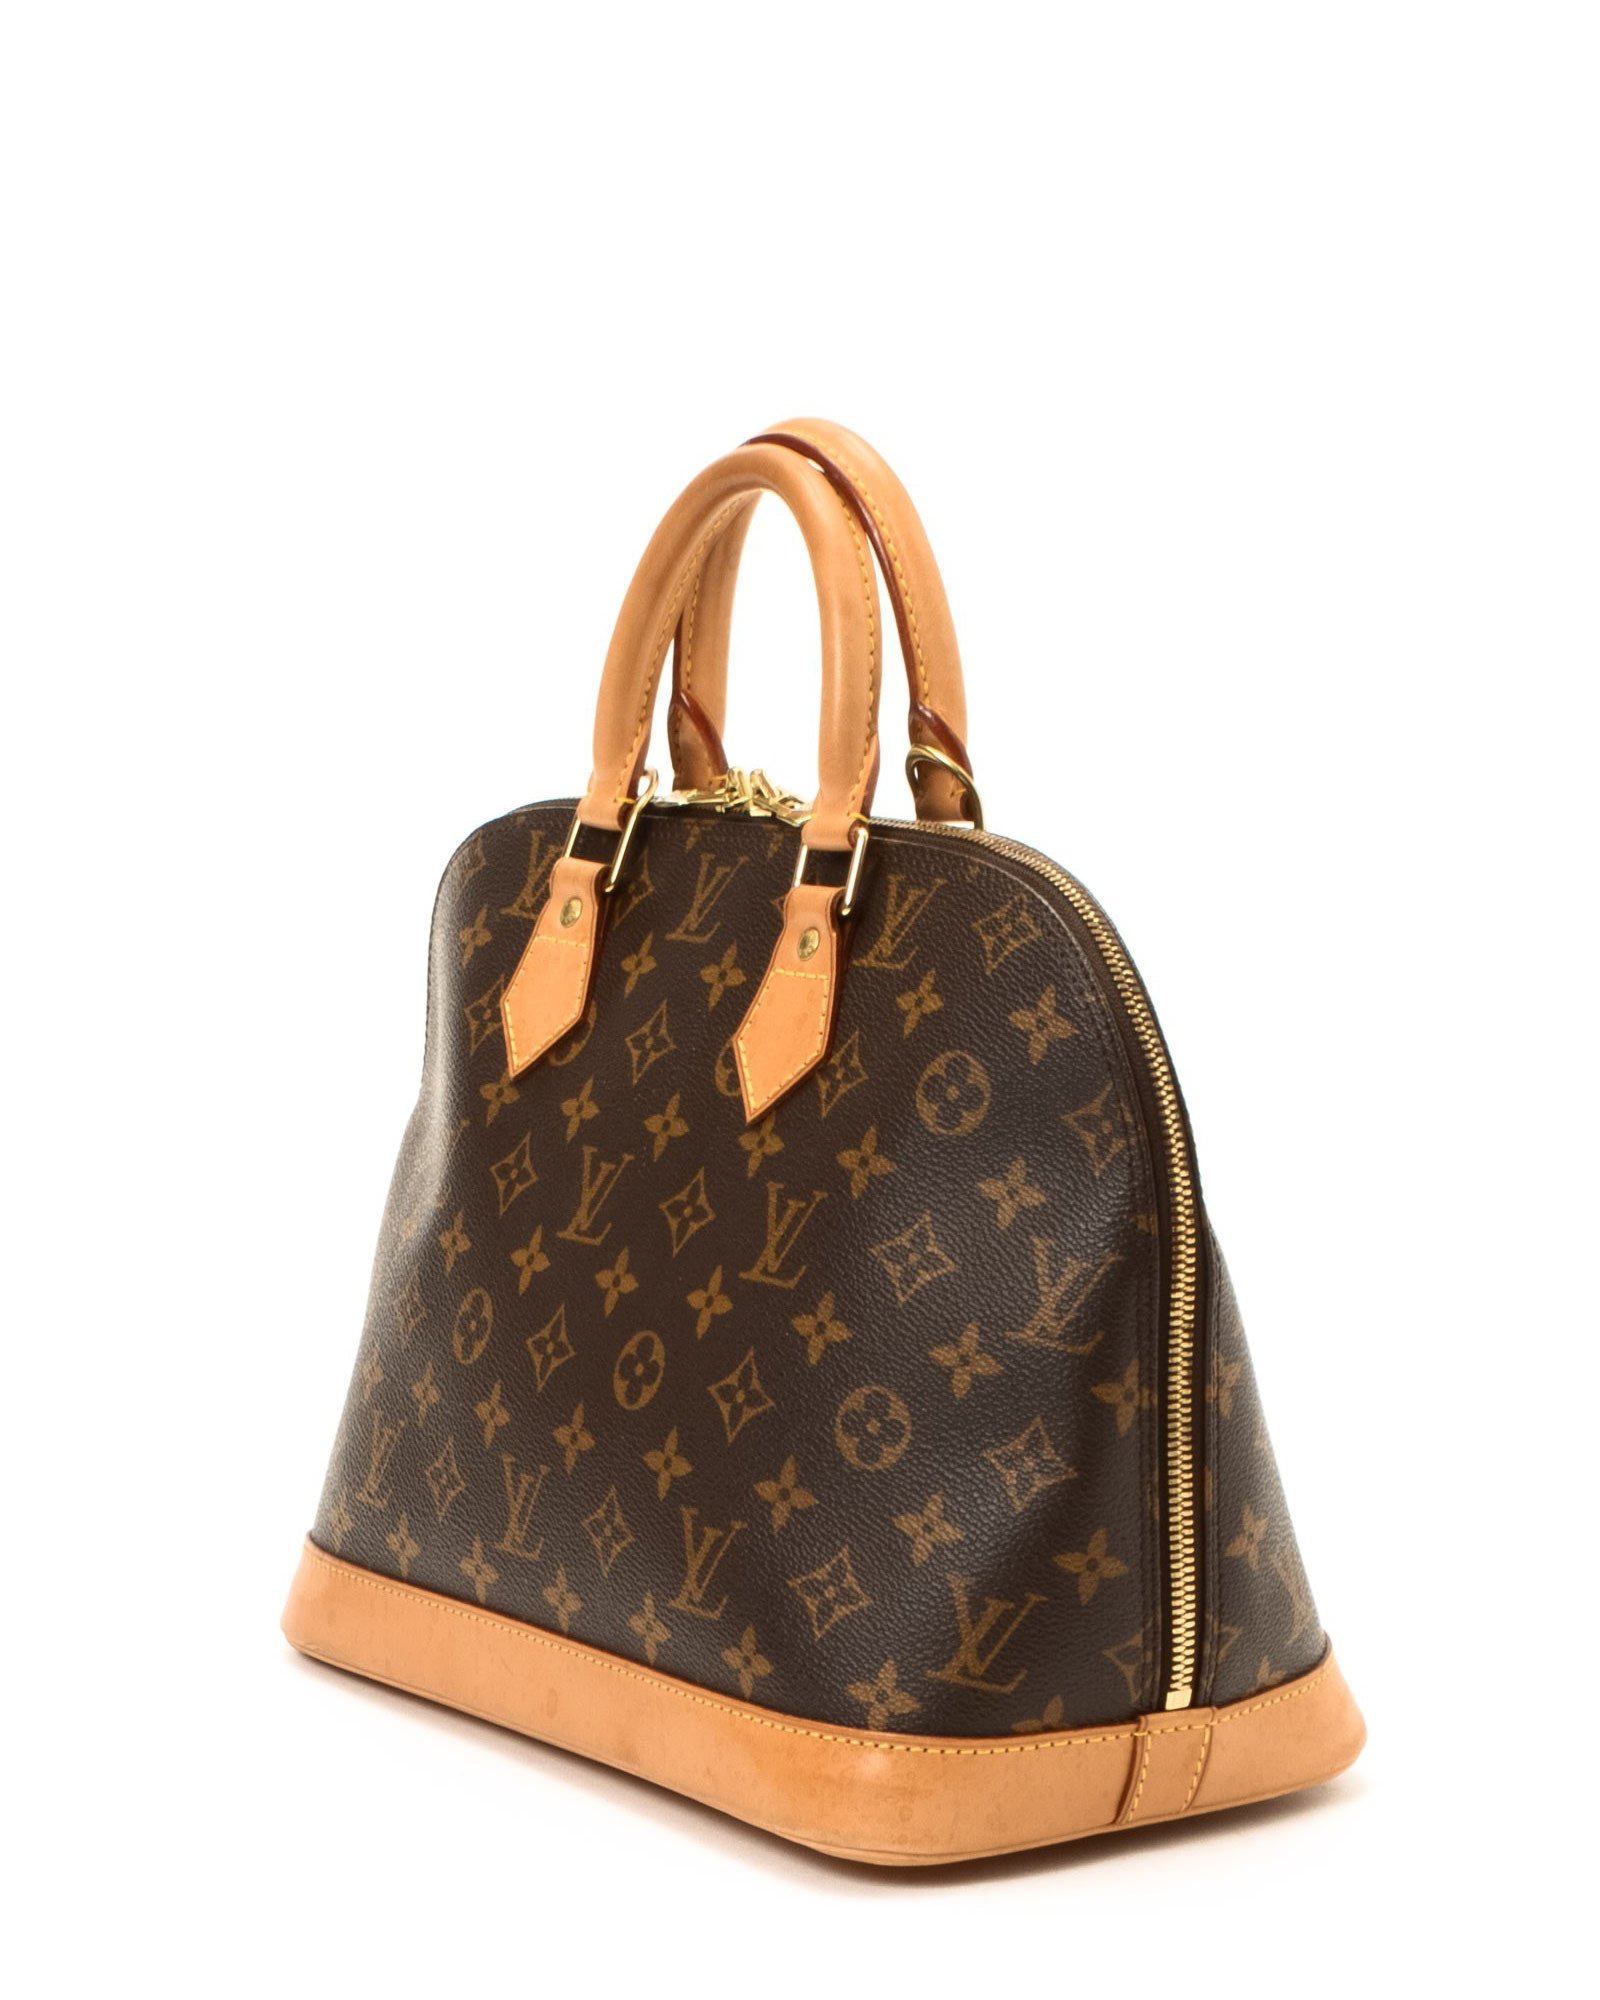 Retro Louis Vuitton Handbag | Jaguar Clubs of North America